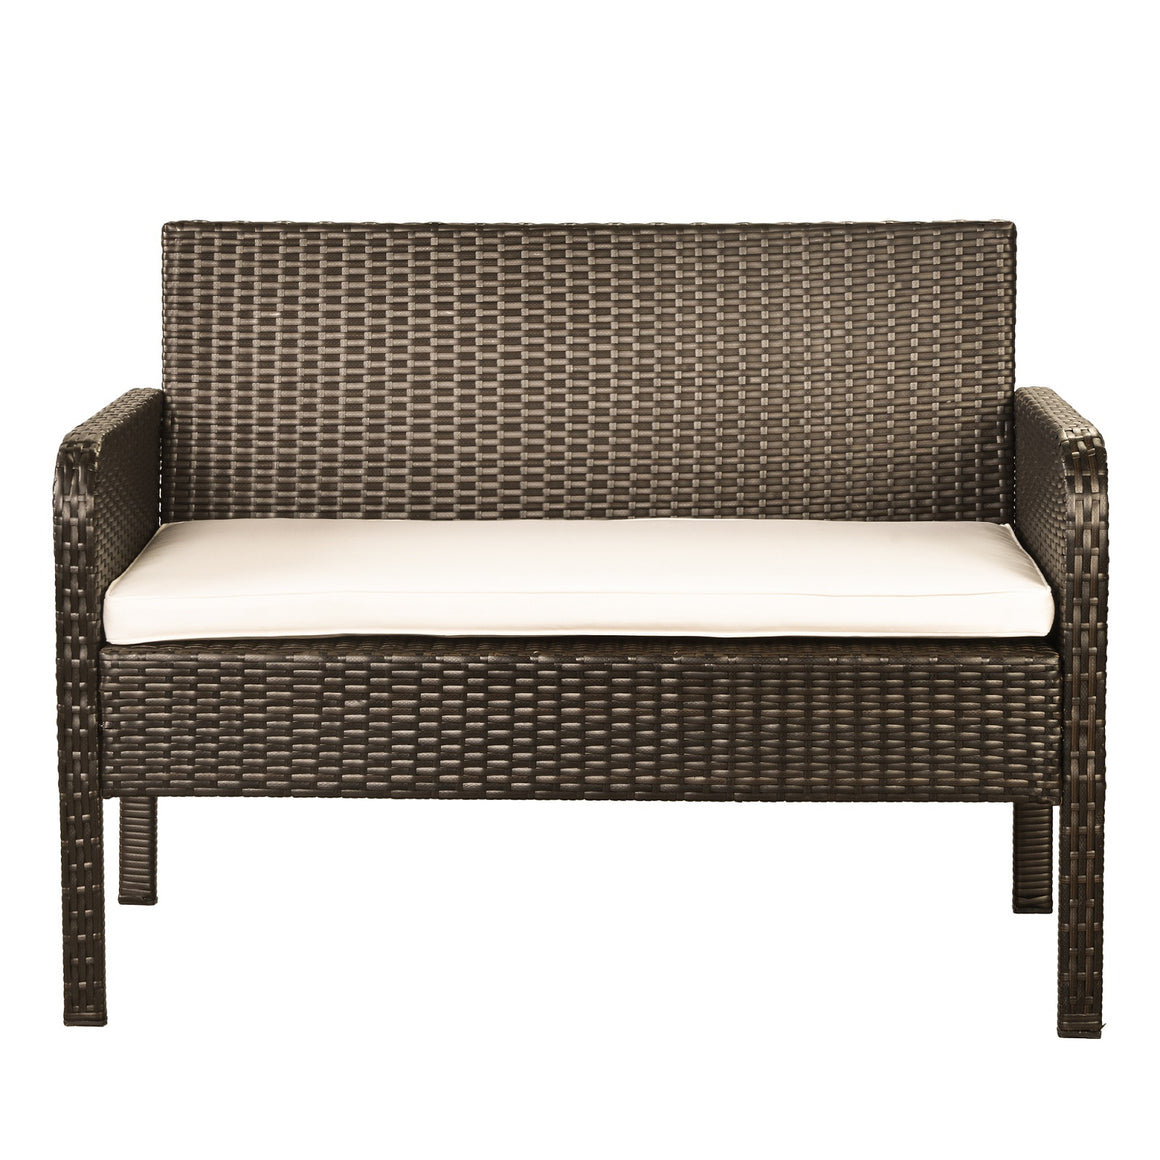 Fablise 4 Piece Patio Furniture Outdoor Conversation Wicker Sofa Set